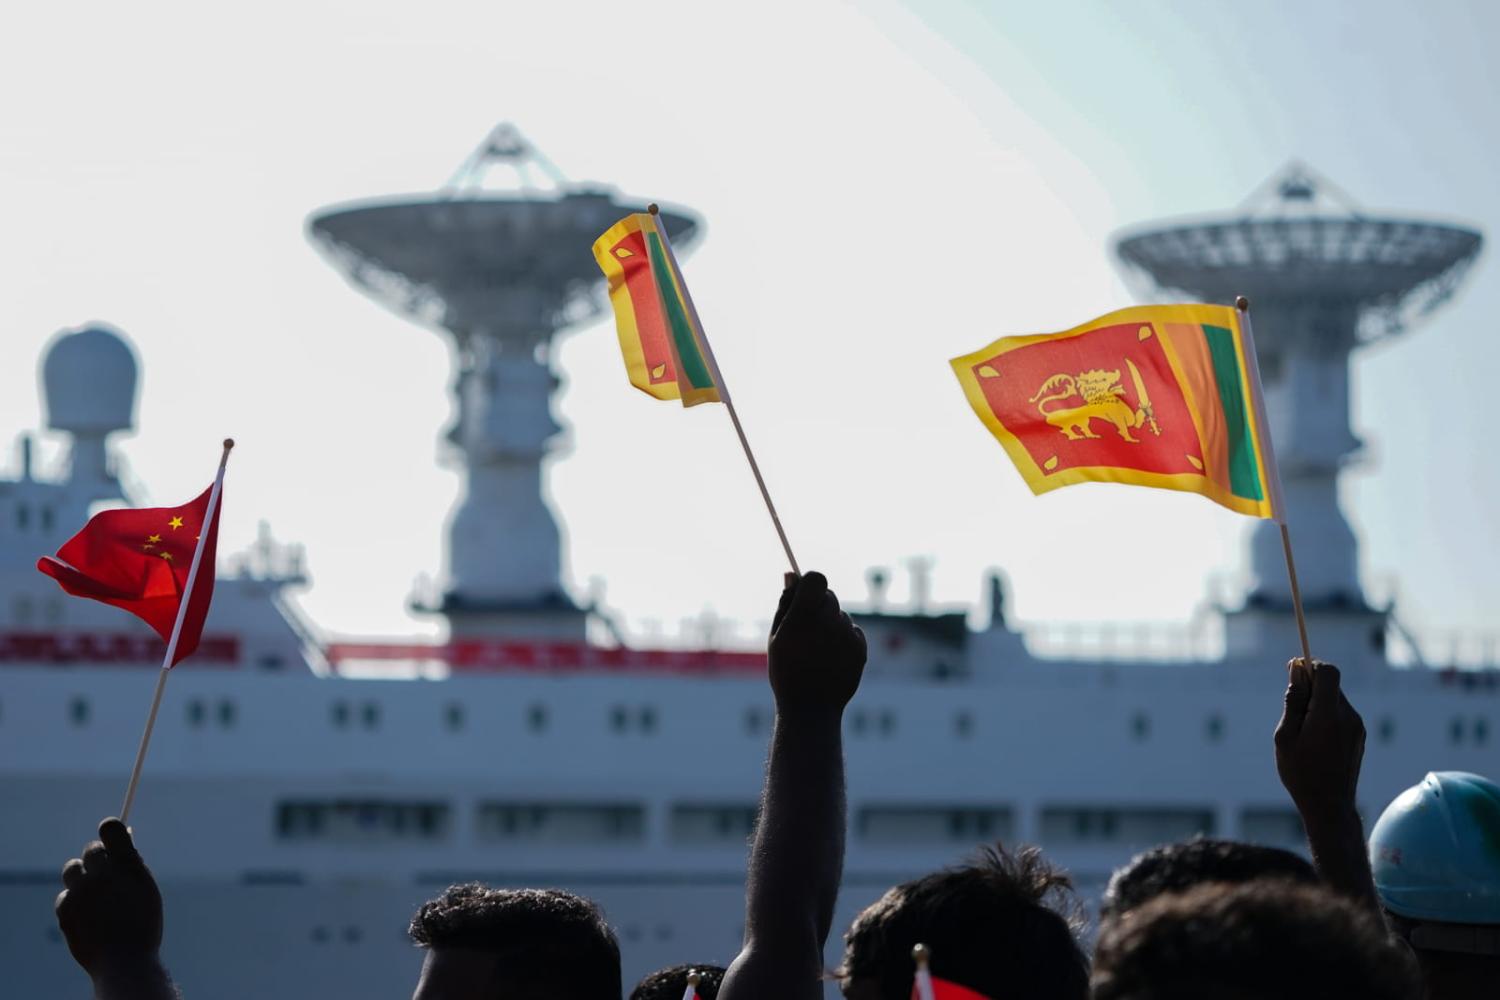 Chinese tracking vessel Yuan Wang 5 berth at the Hambantota port, 16 August, Sri Lanka (Thilina Kaluthotage/NurPhoto via Getty Images)